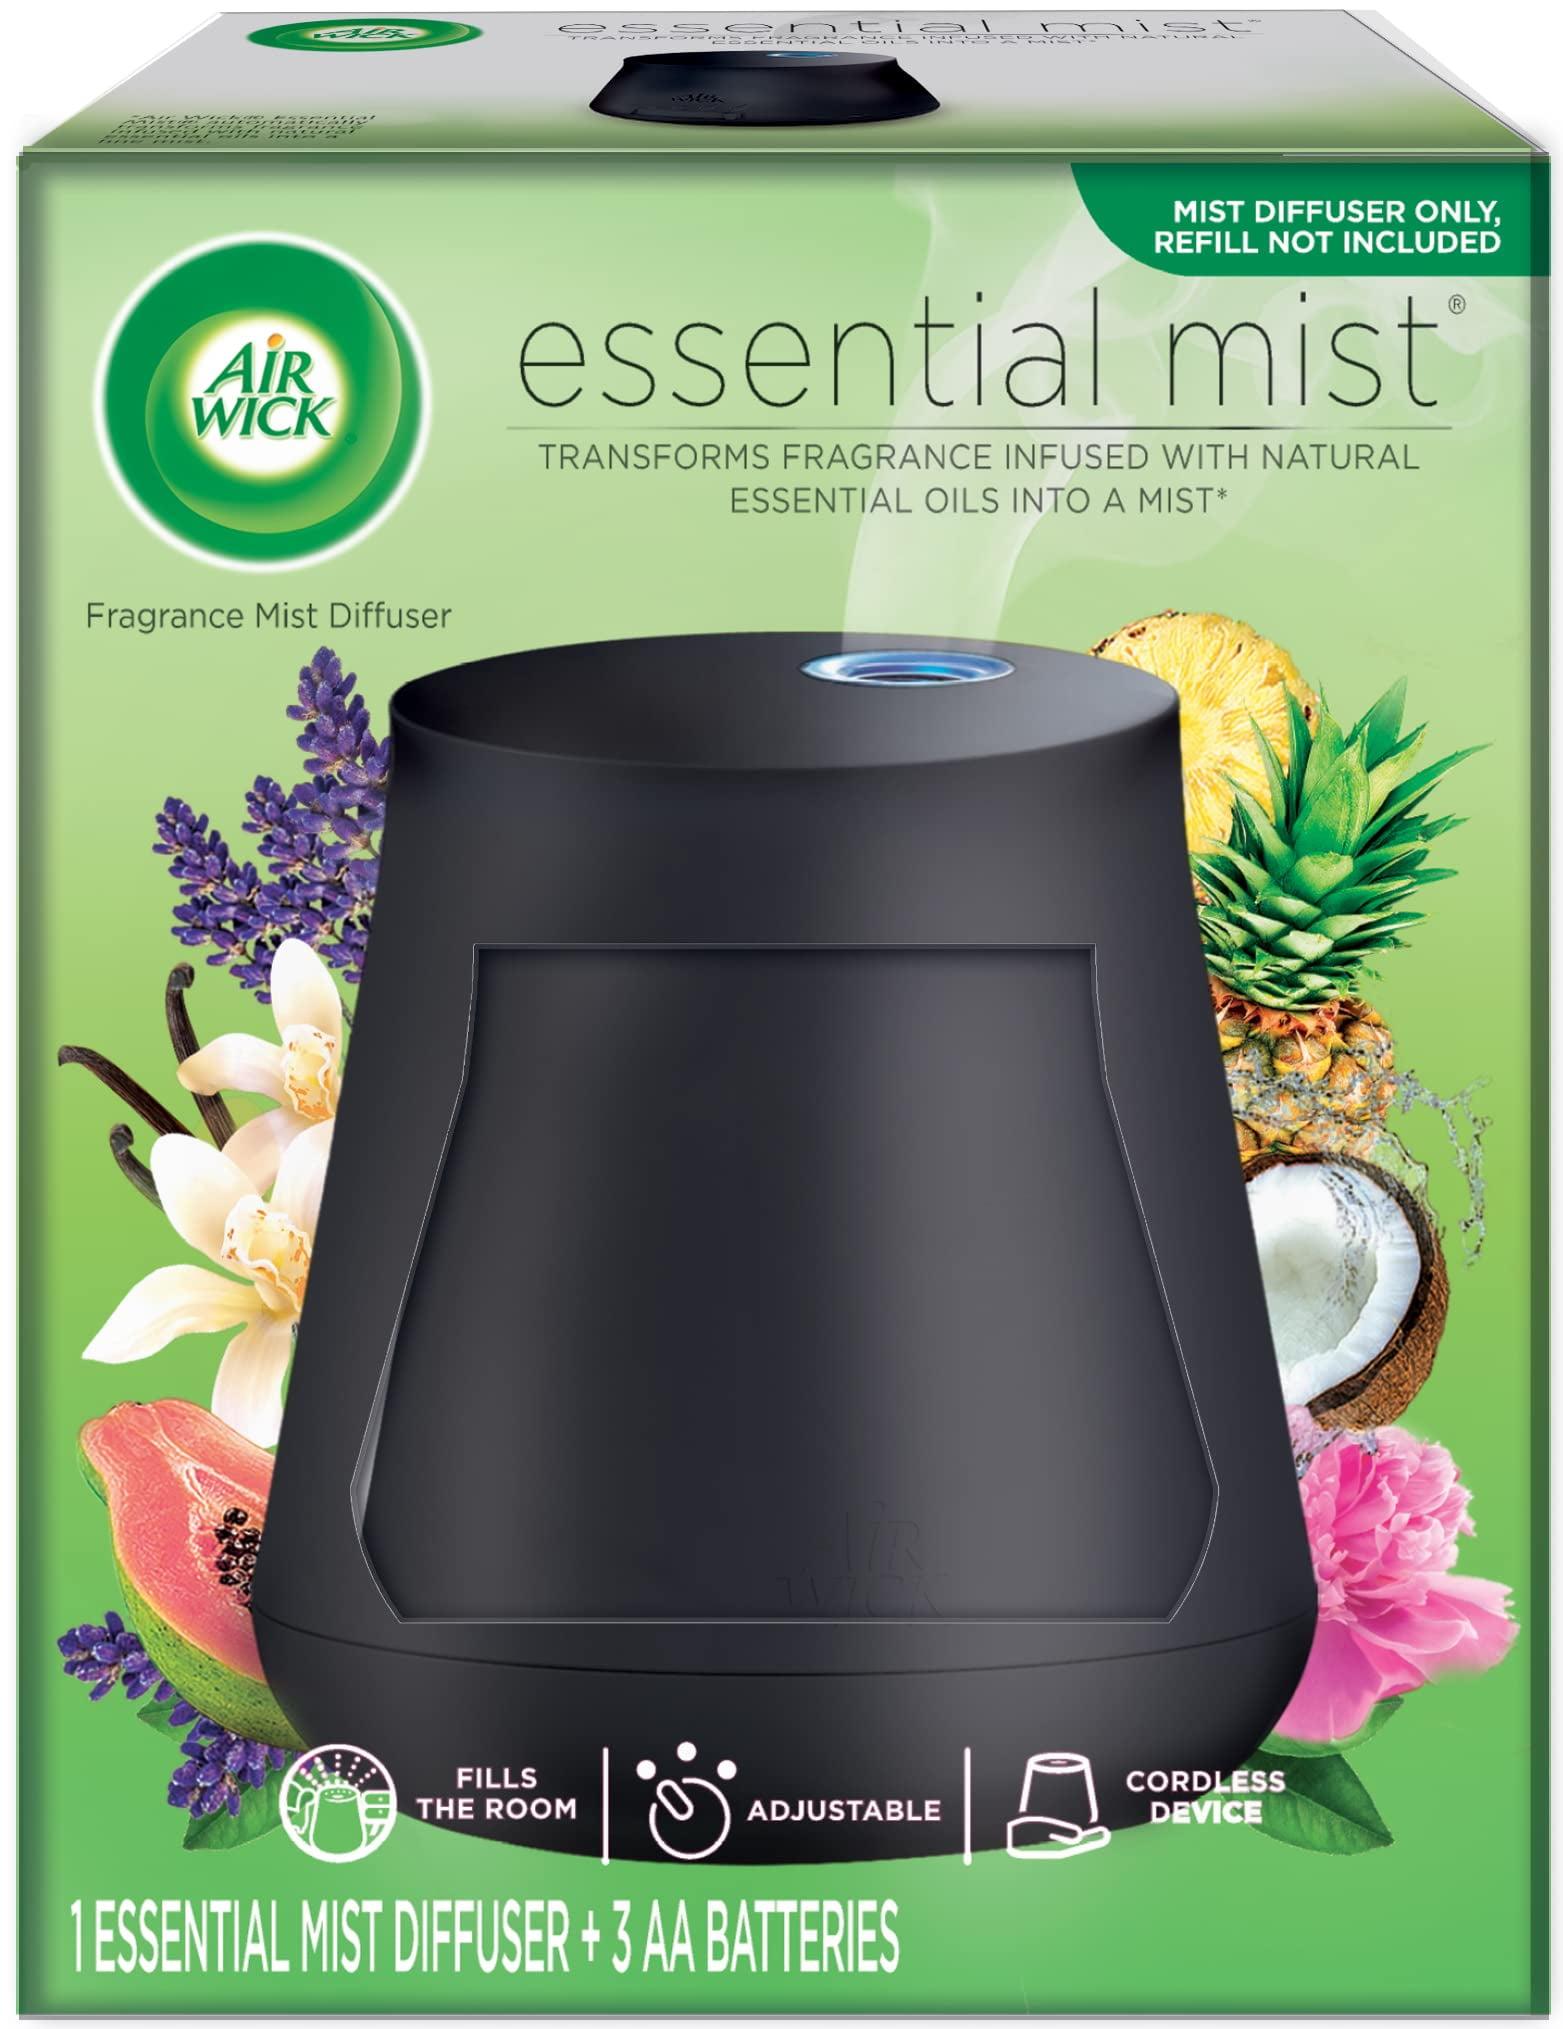 Sleek Cordless Essential Oil Mist Diffuser with Adjustable Intensity